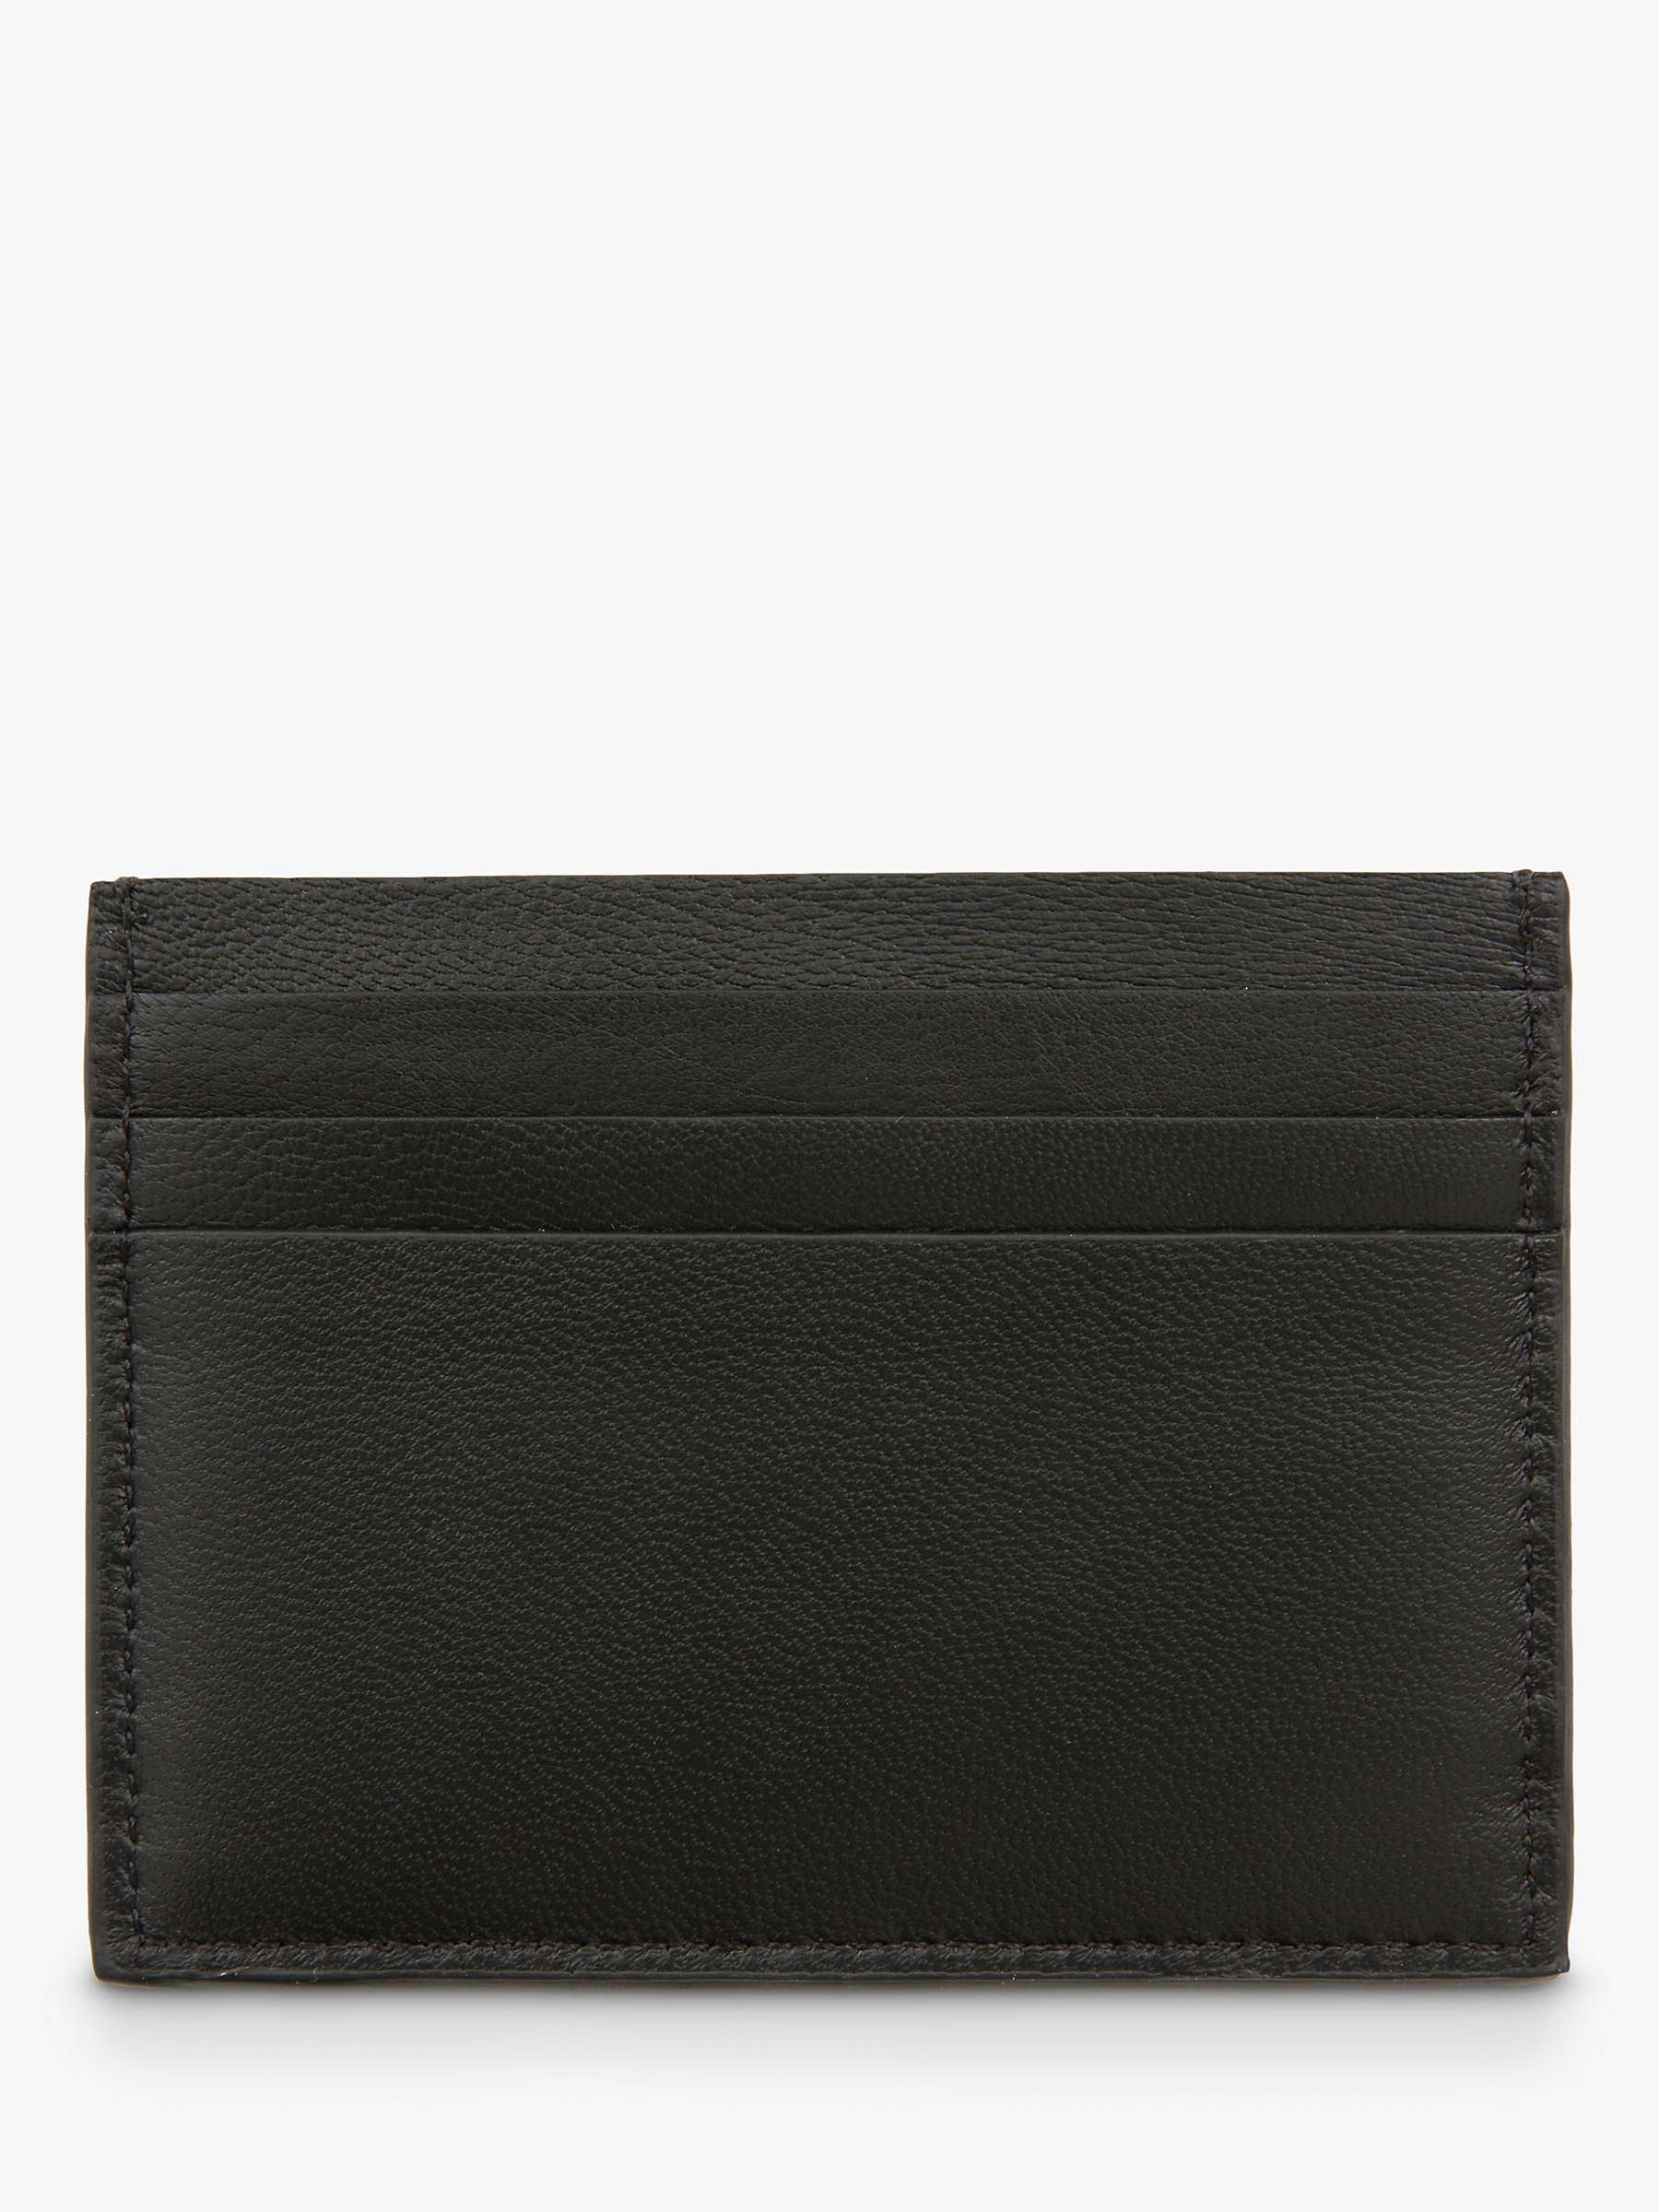 Calvin Klein Leather Card Holder, Black at John Lewis & Partners